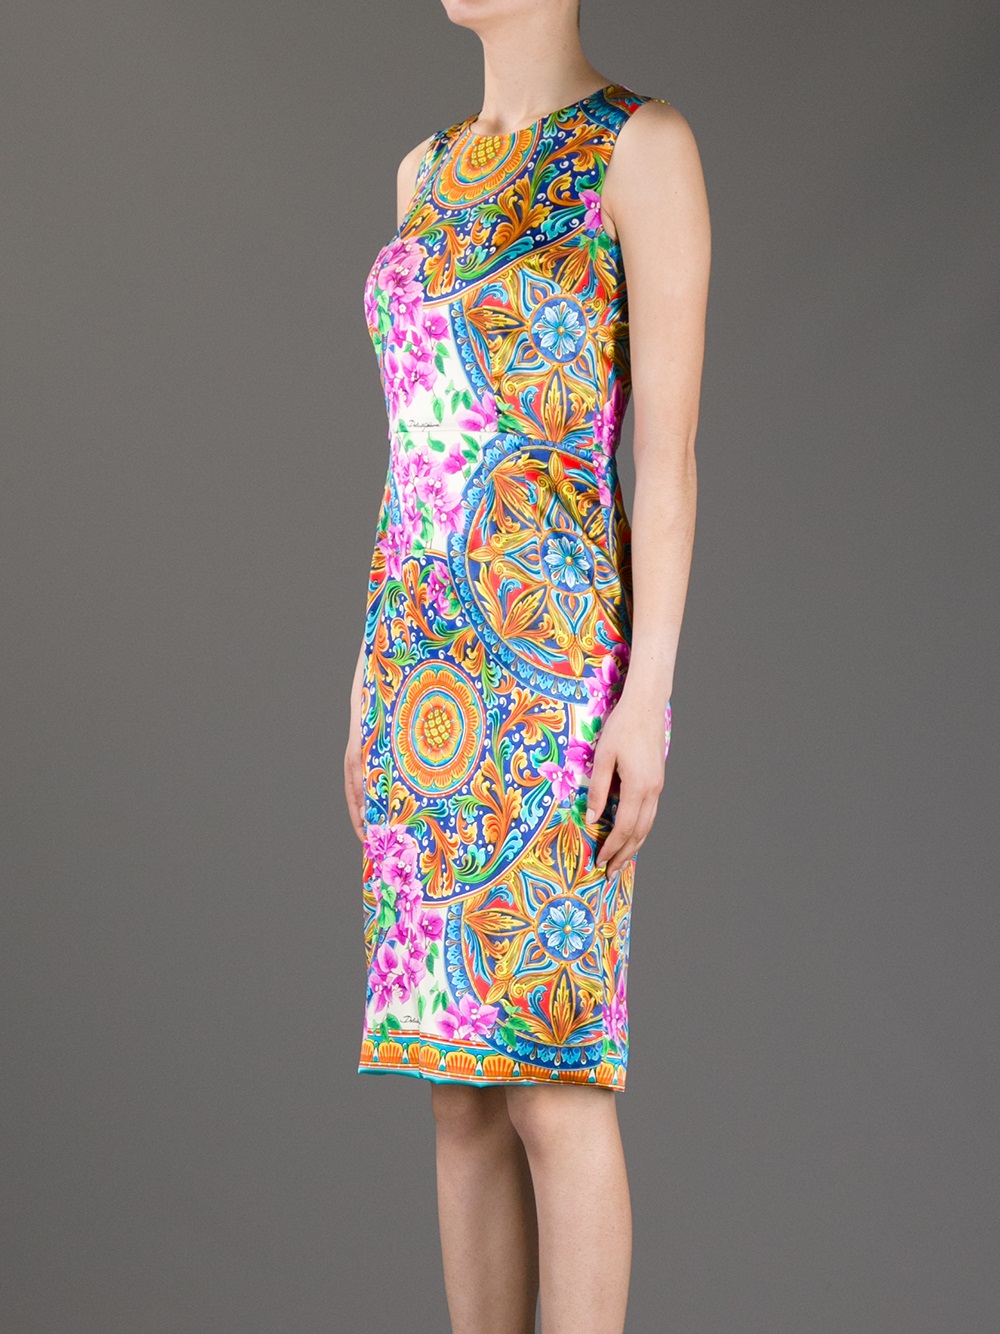 Lyst - Dolce & Gabbana Floral Print Dress